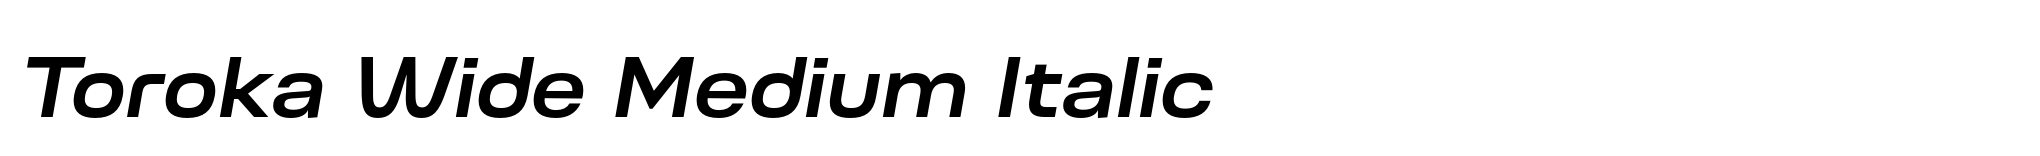 Toroka Wide Medium Italic image